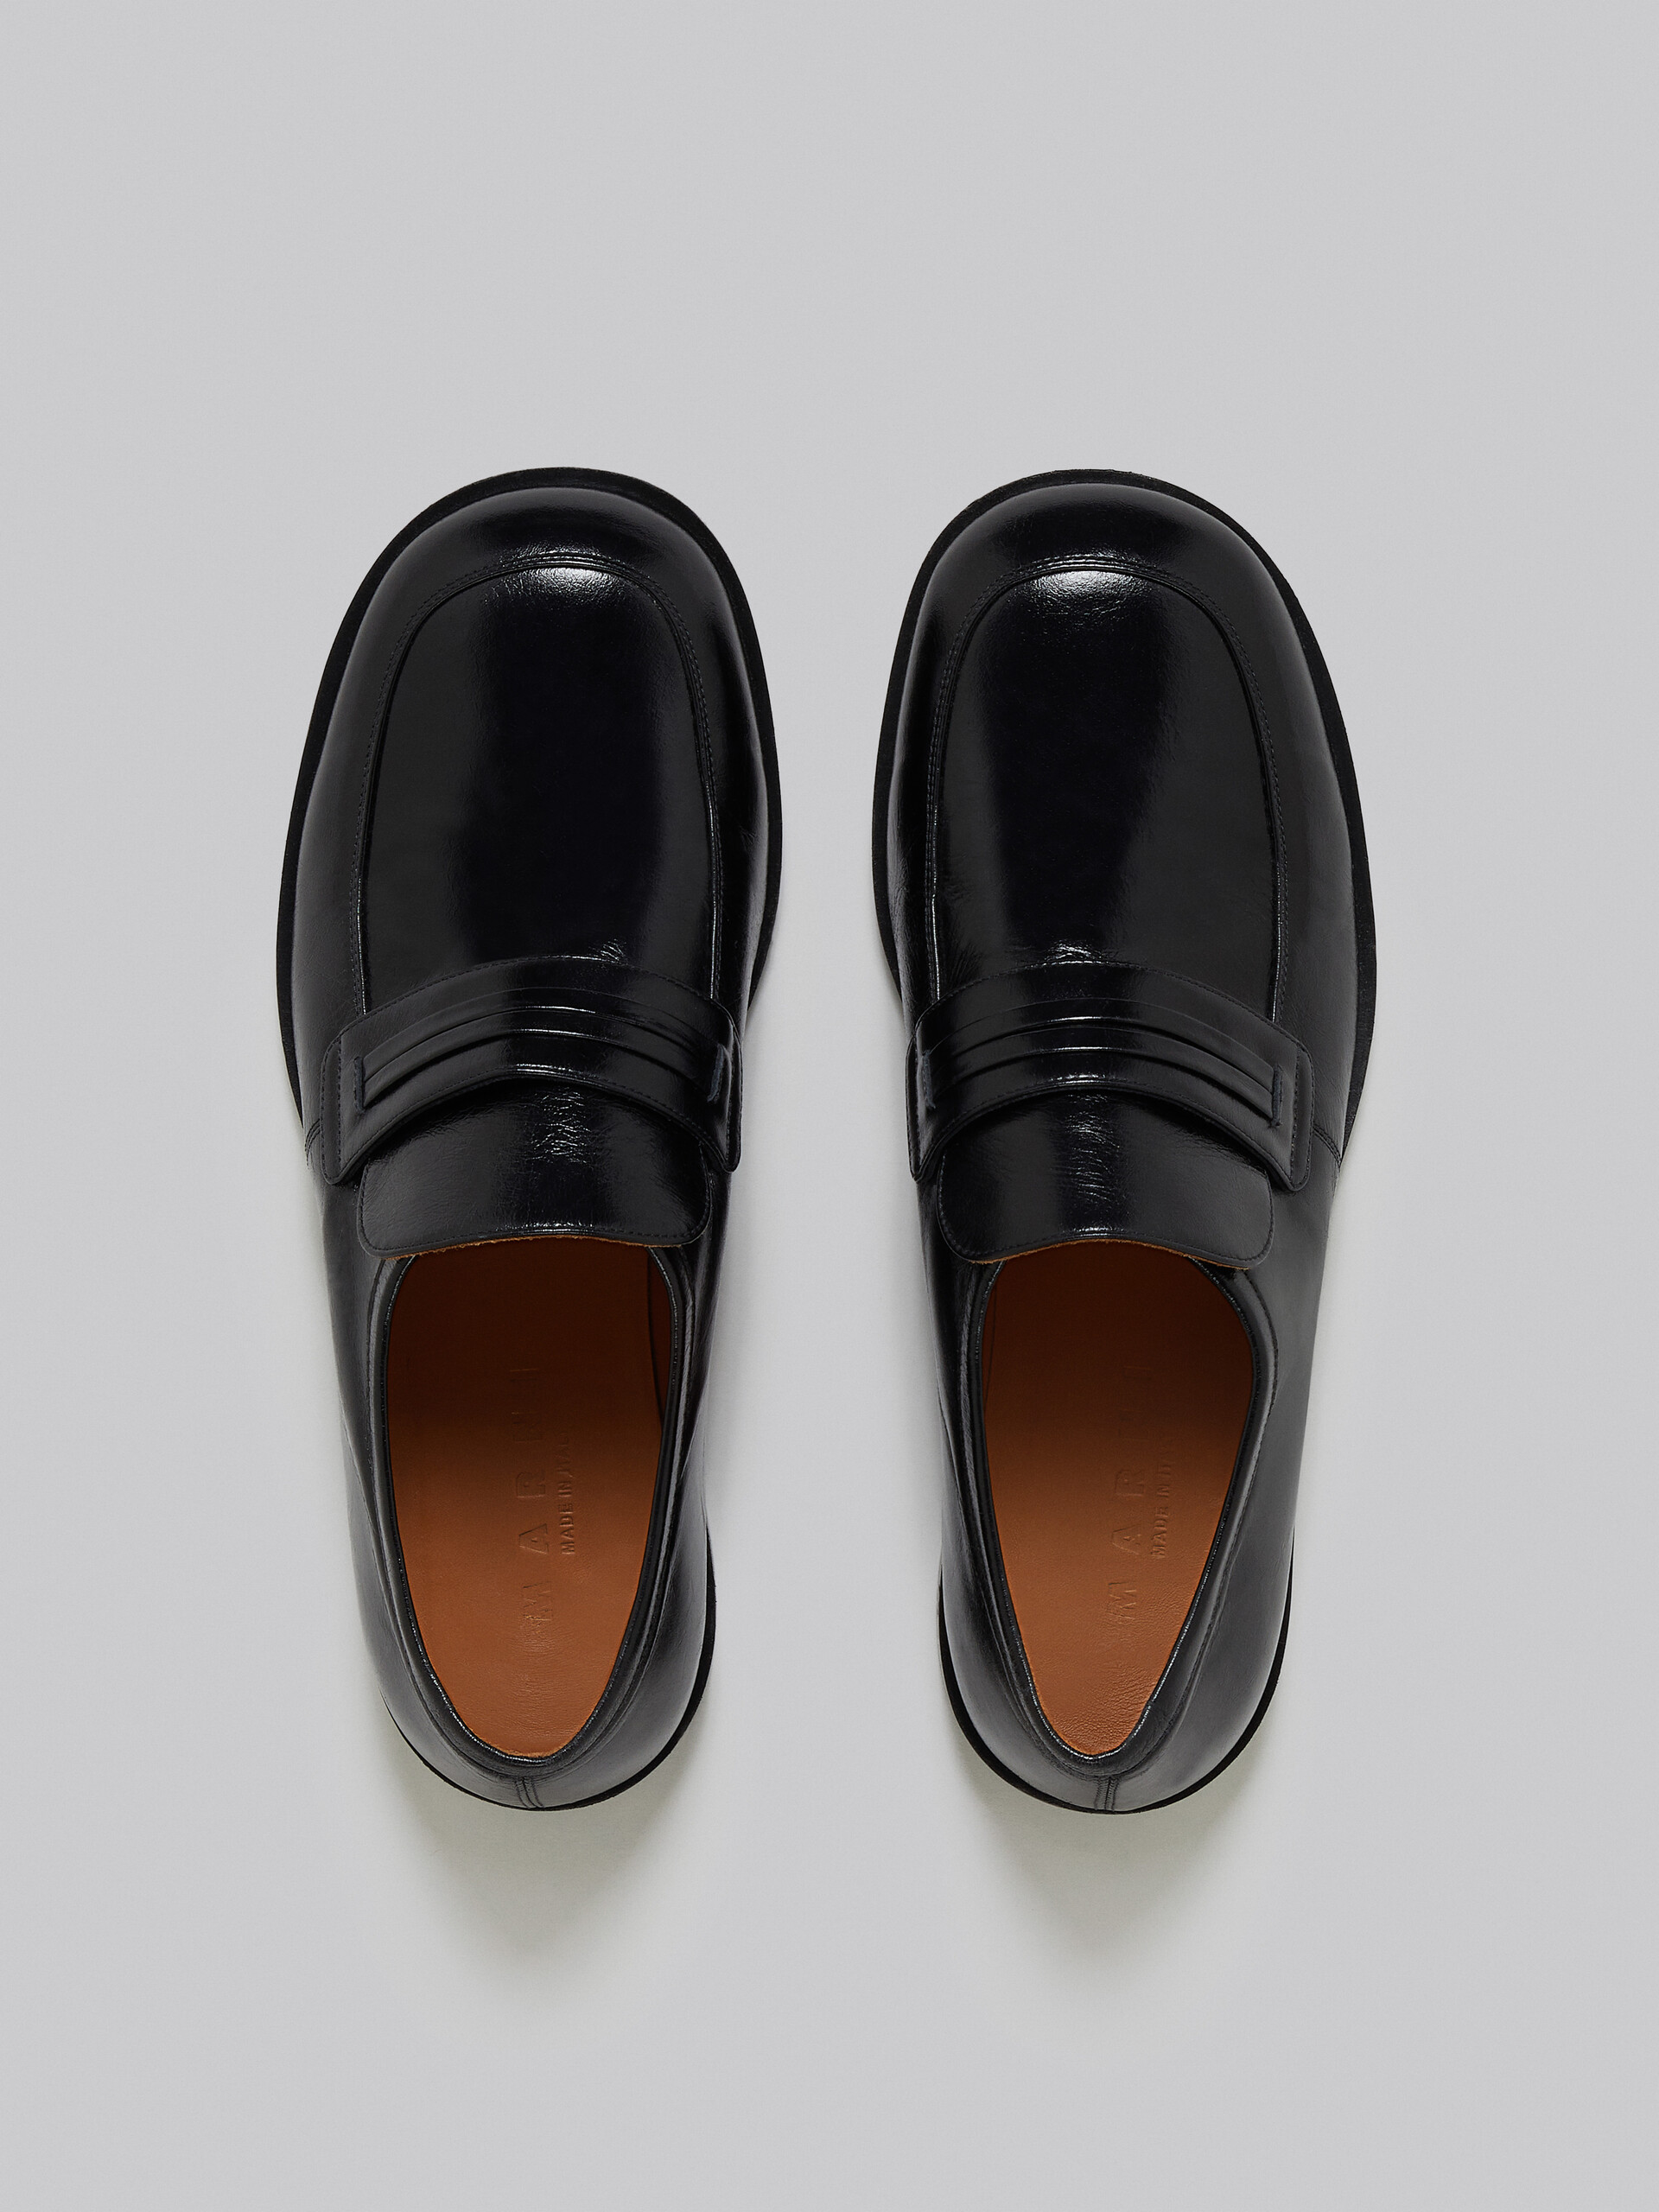 Black shiny leather moccasin - Mocassin - Image 4